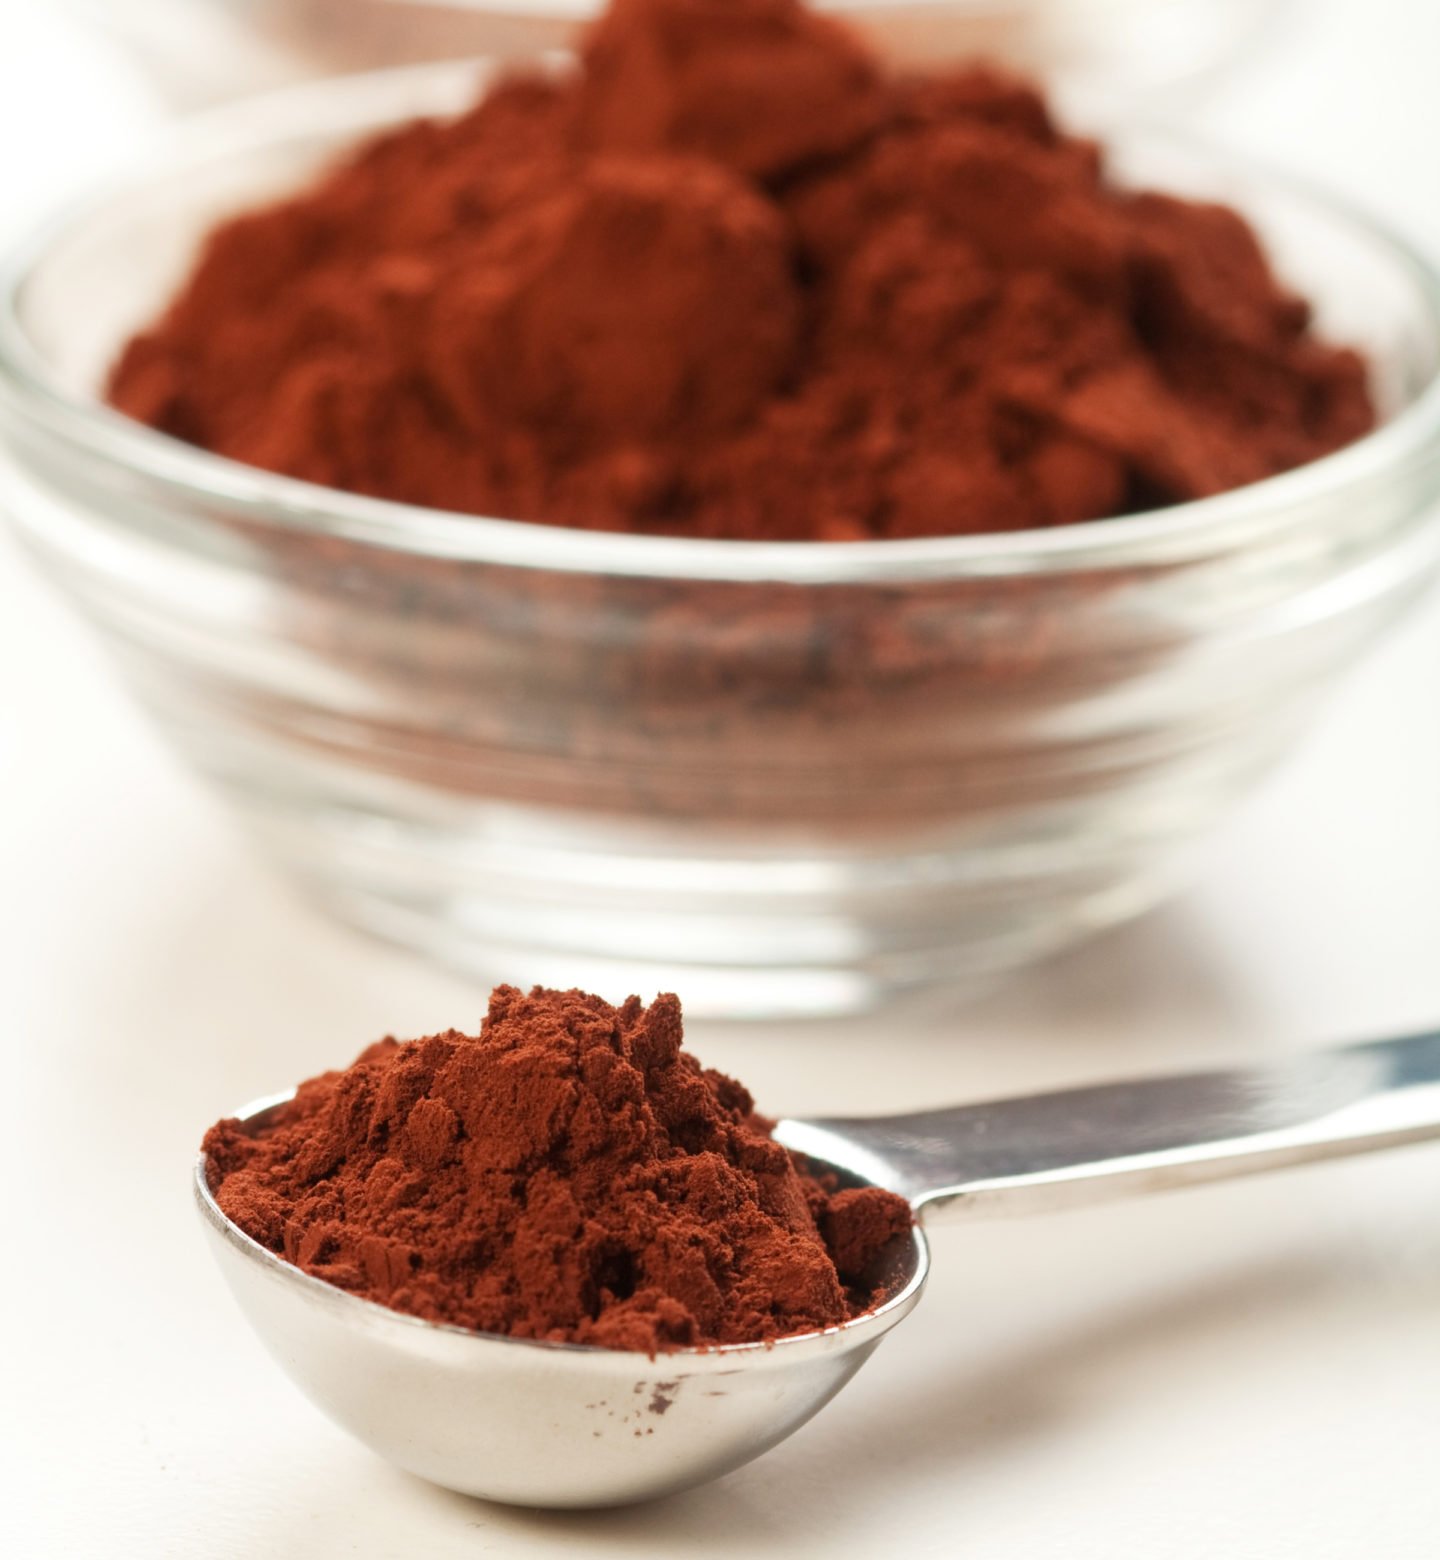 Dutch process cocoa powder as substitute to regular cocoa powder